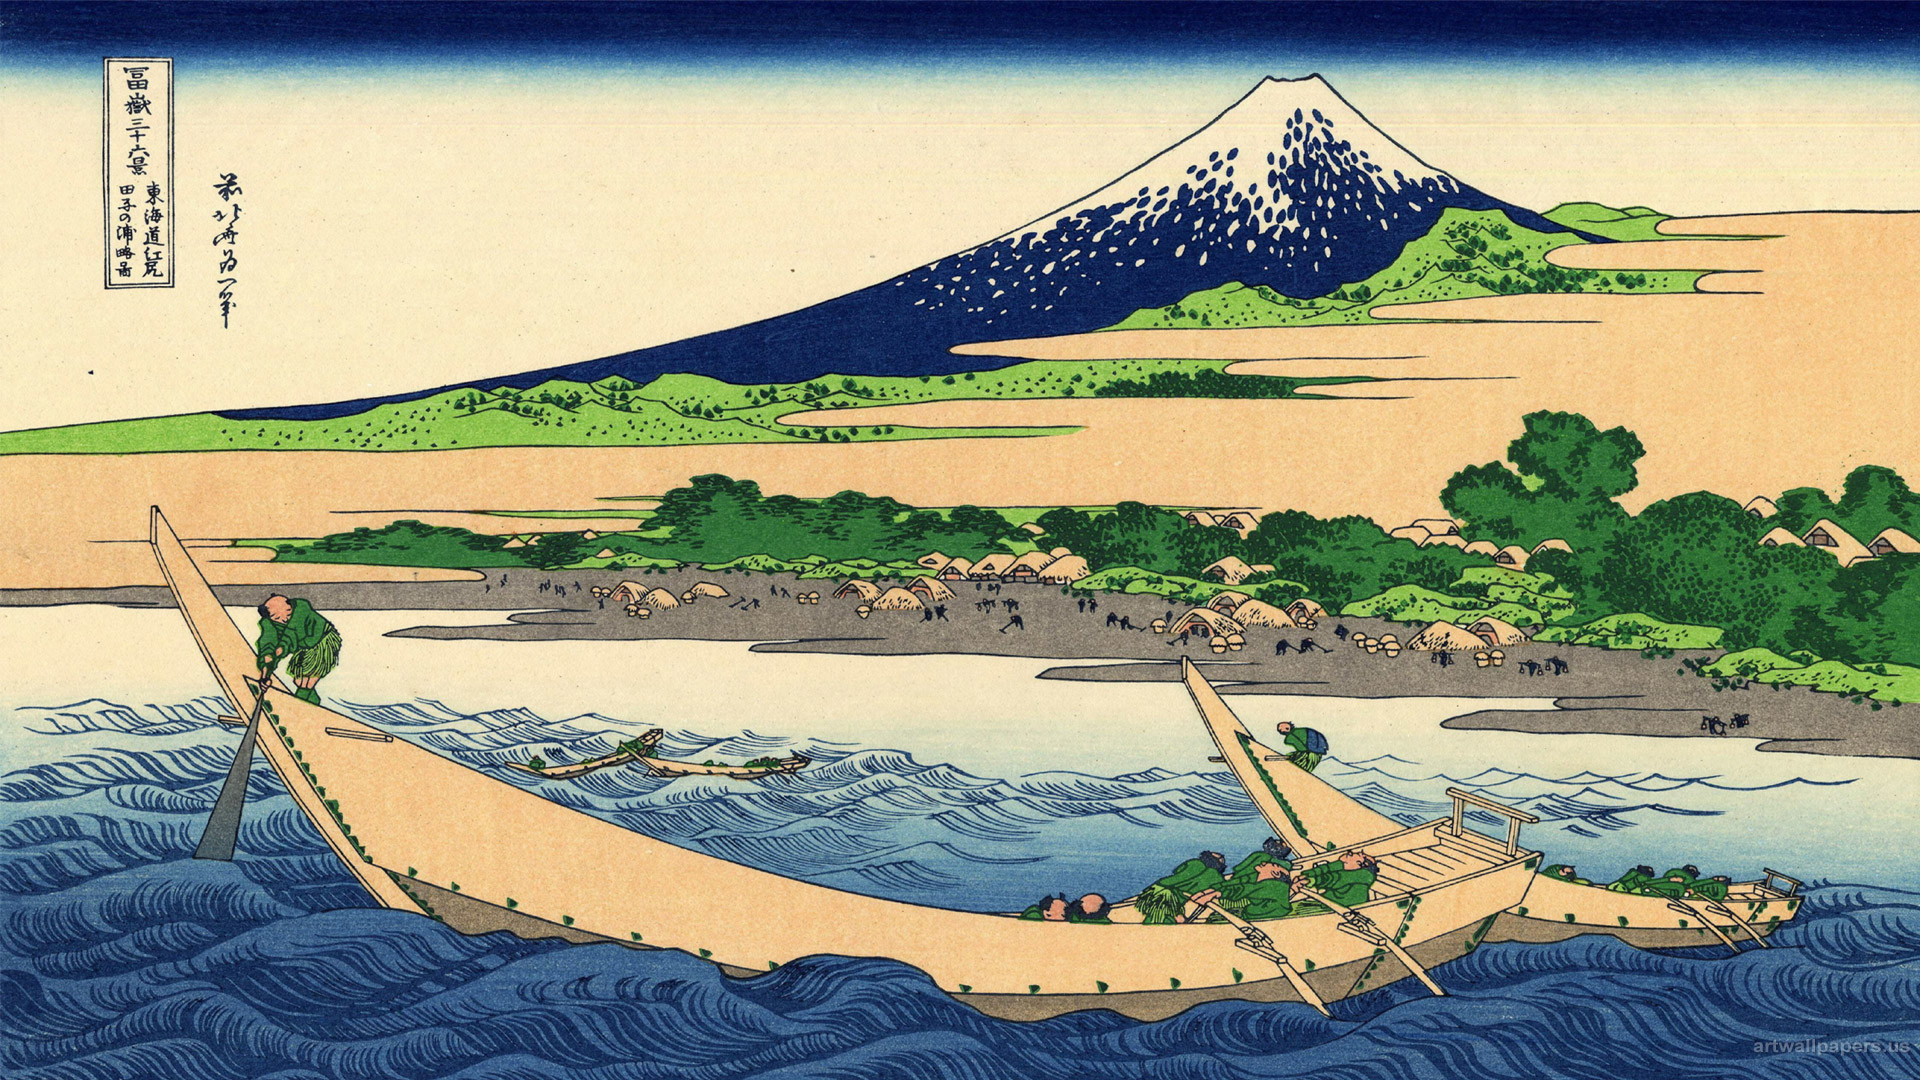 1920x1080 Hokusai Wallpaper, The Great Wave at Kanagawa, Art Print, Wallpapers .